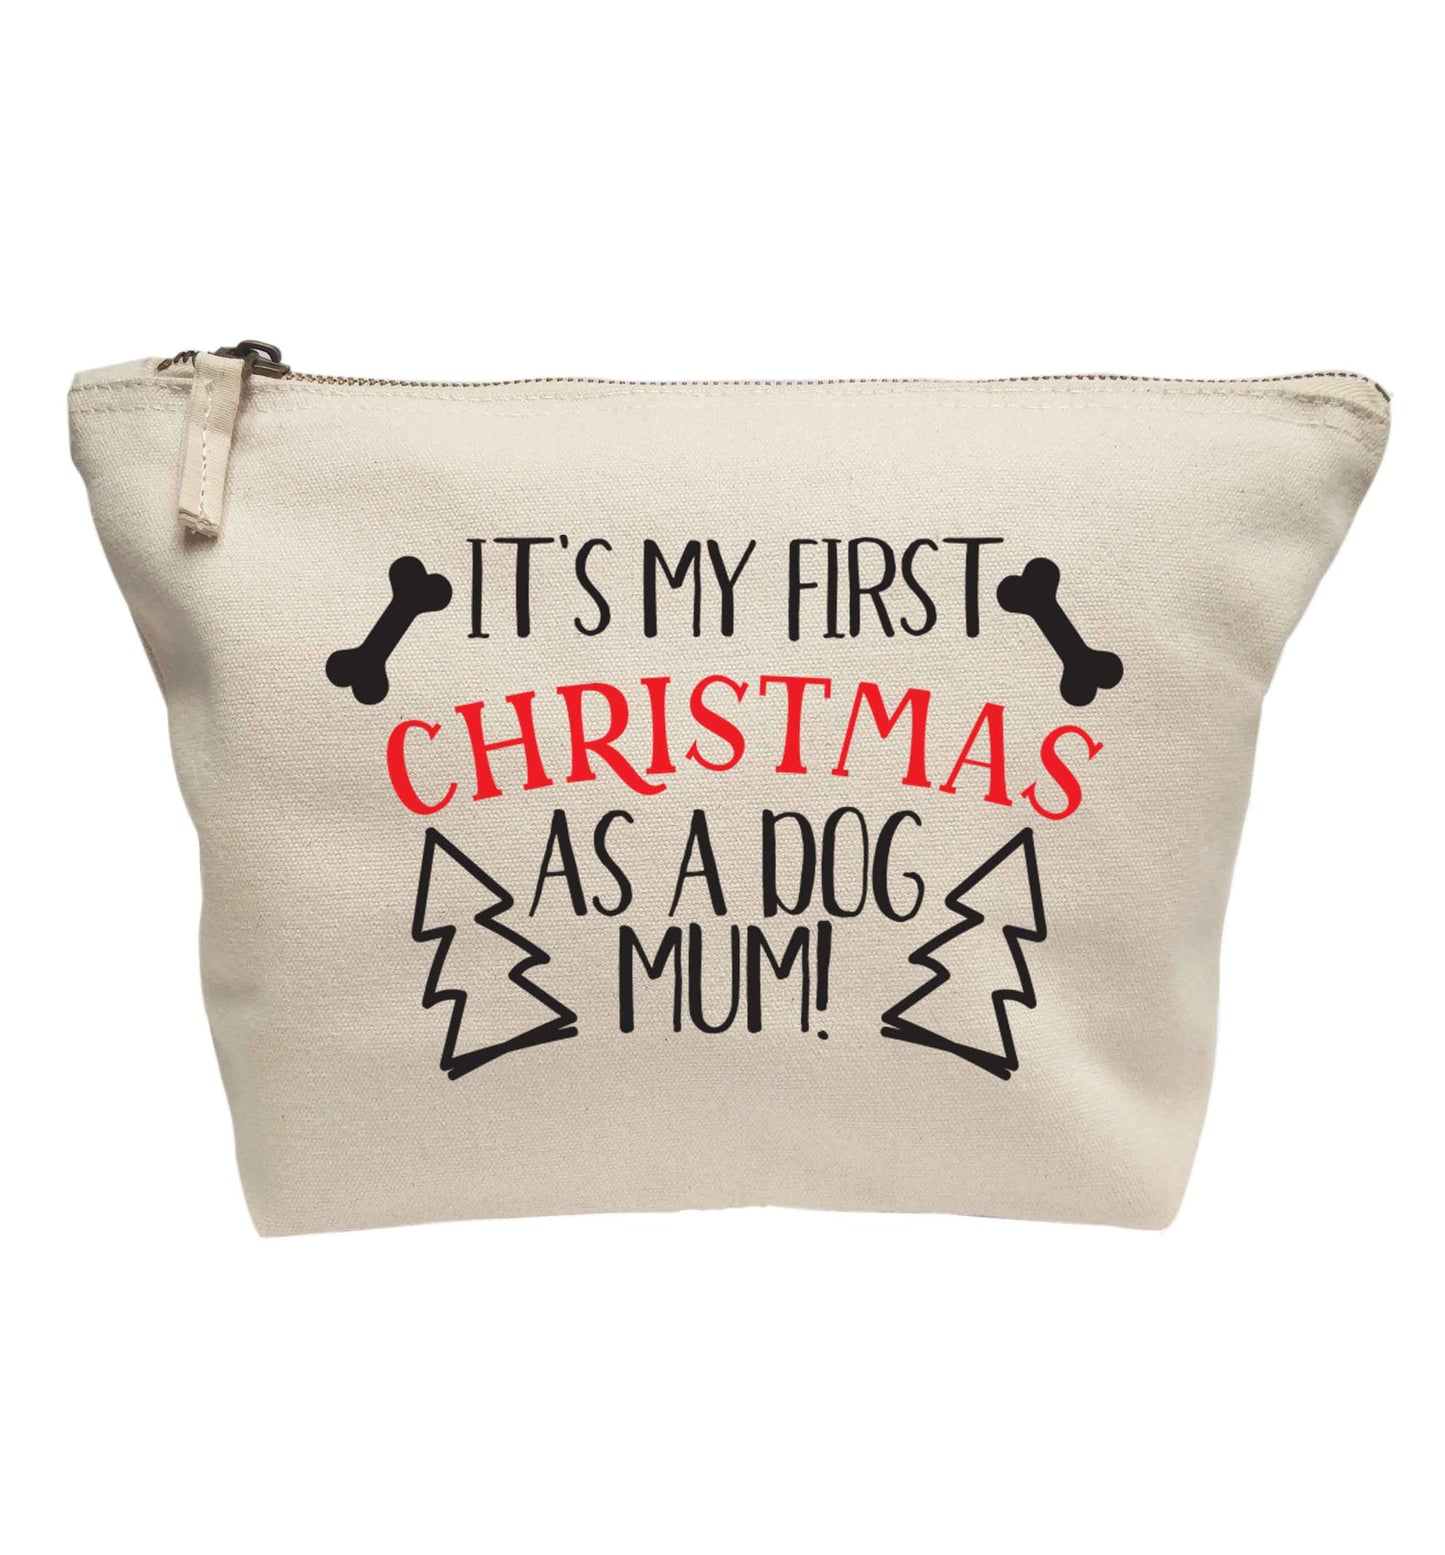 It's my first Christmas as a dog mum! | makeup / wash bag